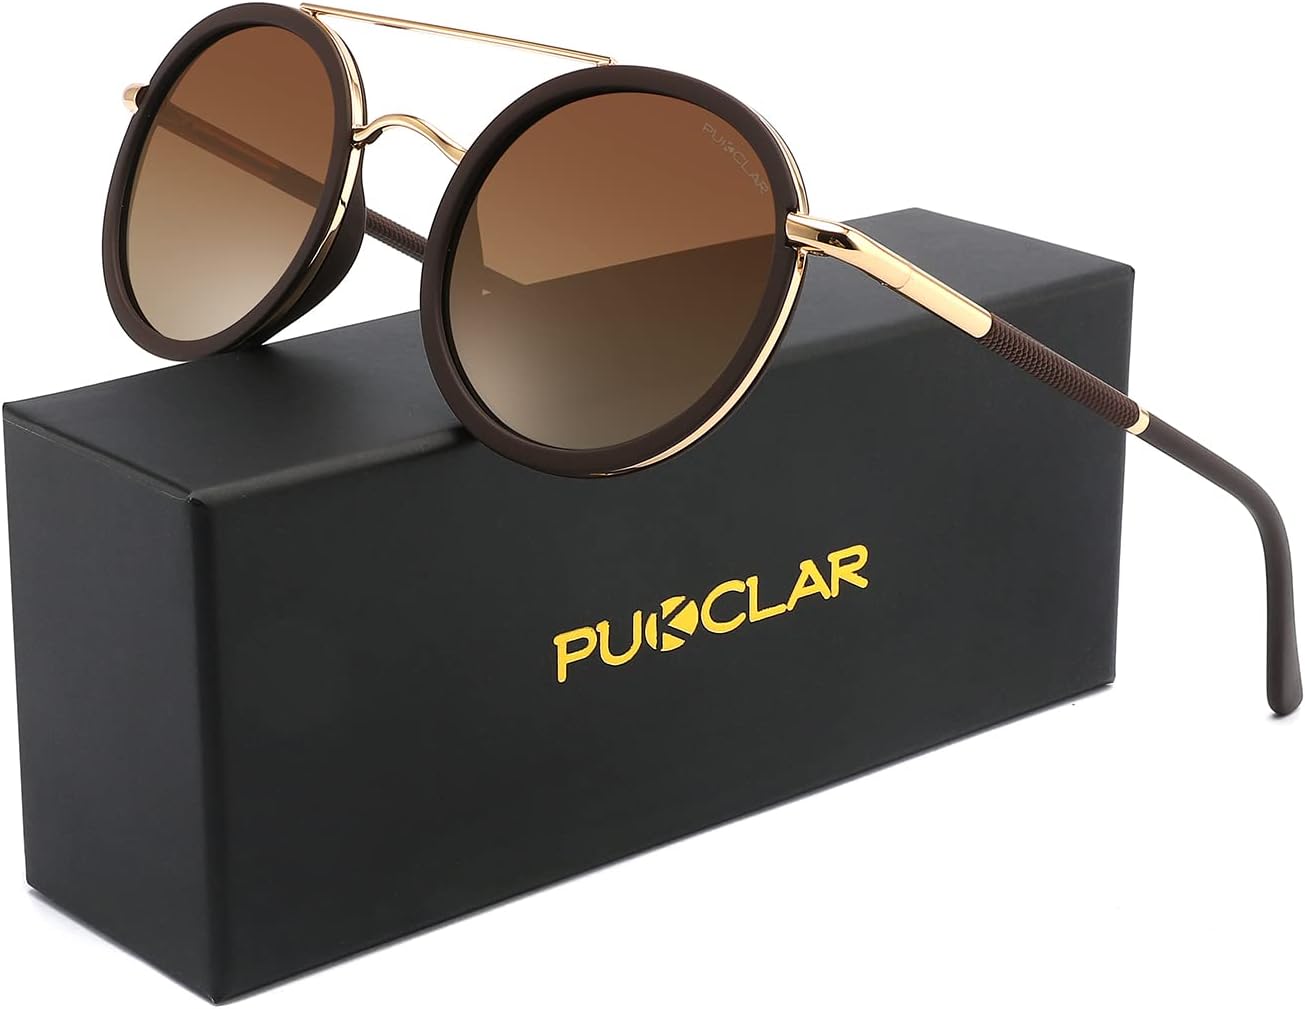 PUKCLAR Sunglasses for Men Polarized Lightweight TR90 Frame UV400 Spring Hinges Sunglasses,Please identify PUKCLAR